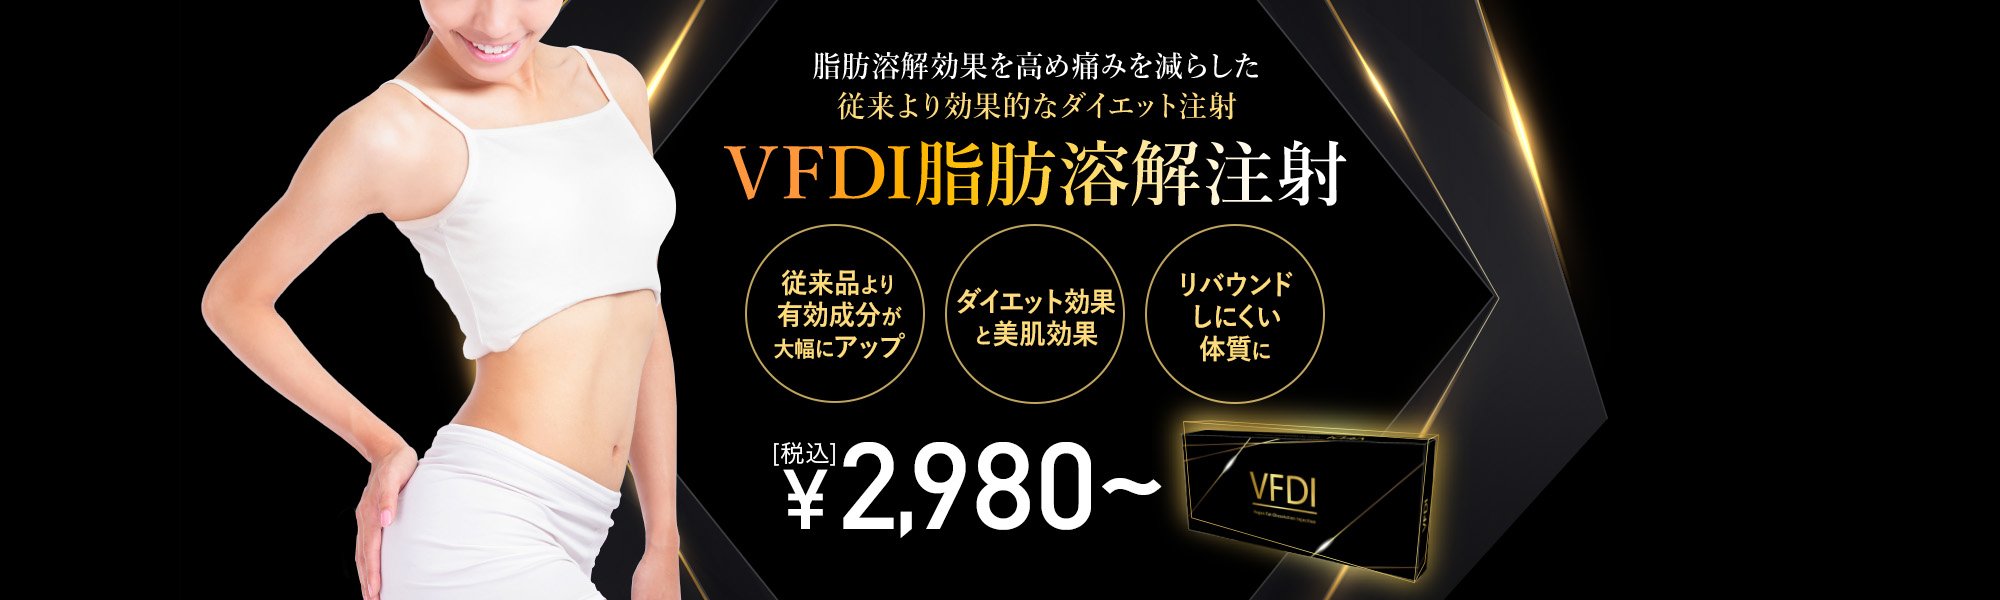 VFDI脂肪溶解注射